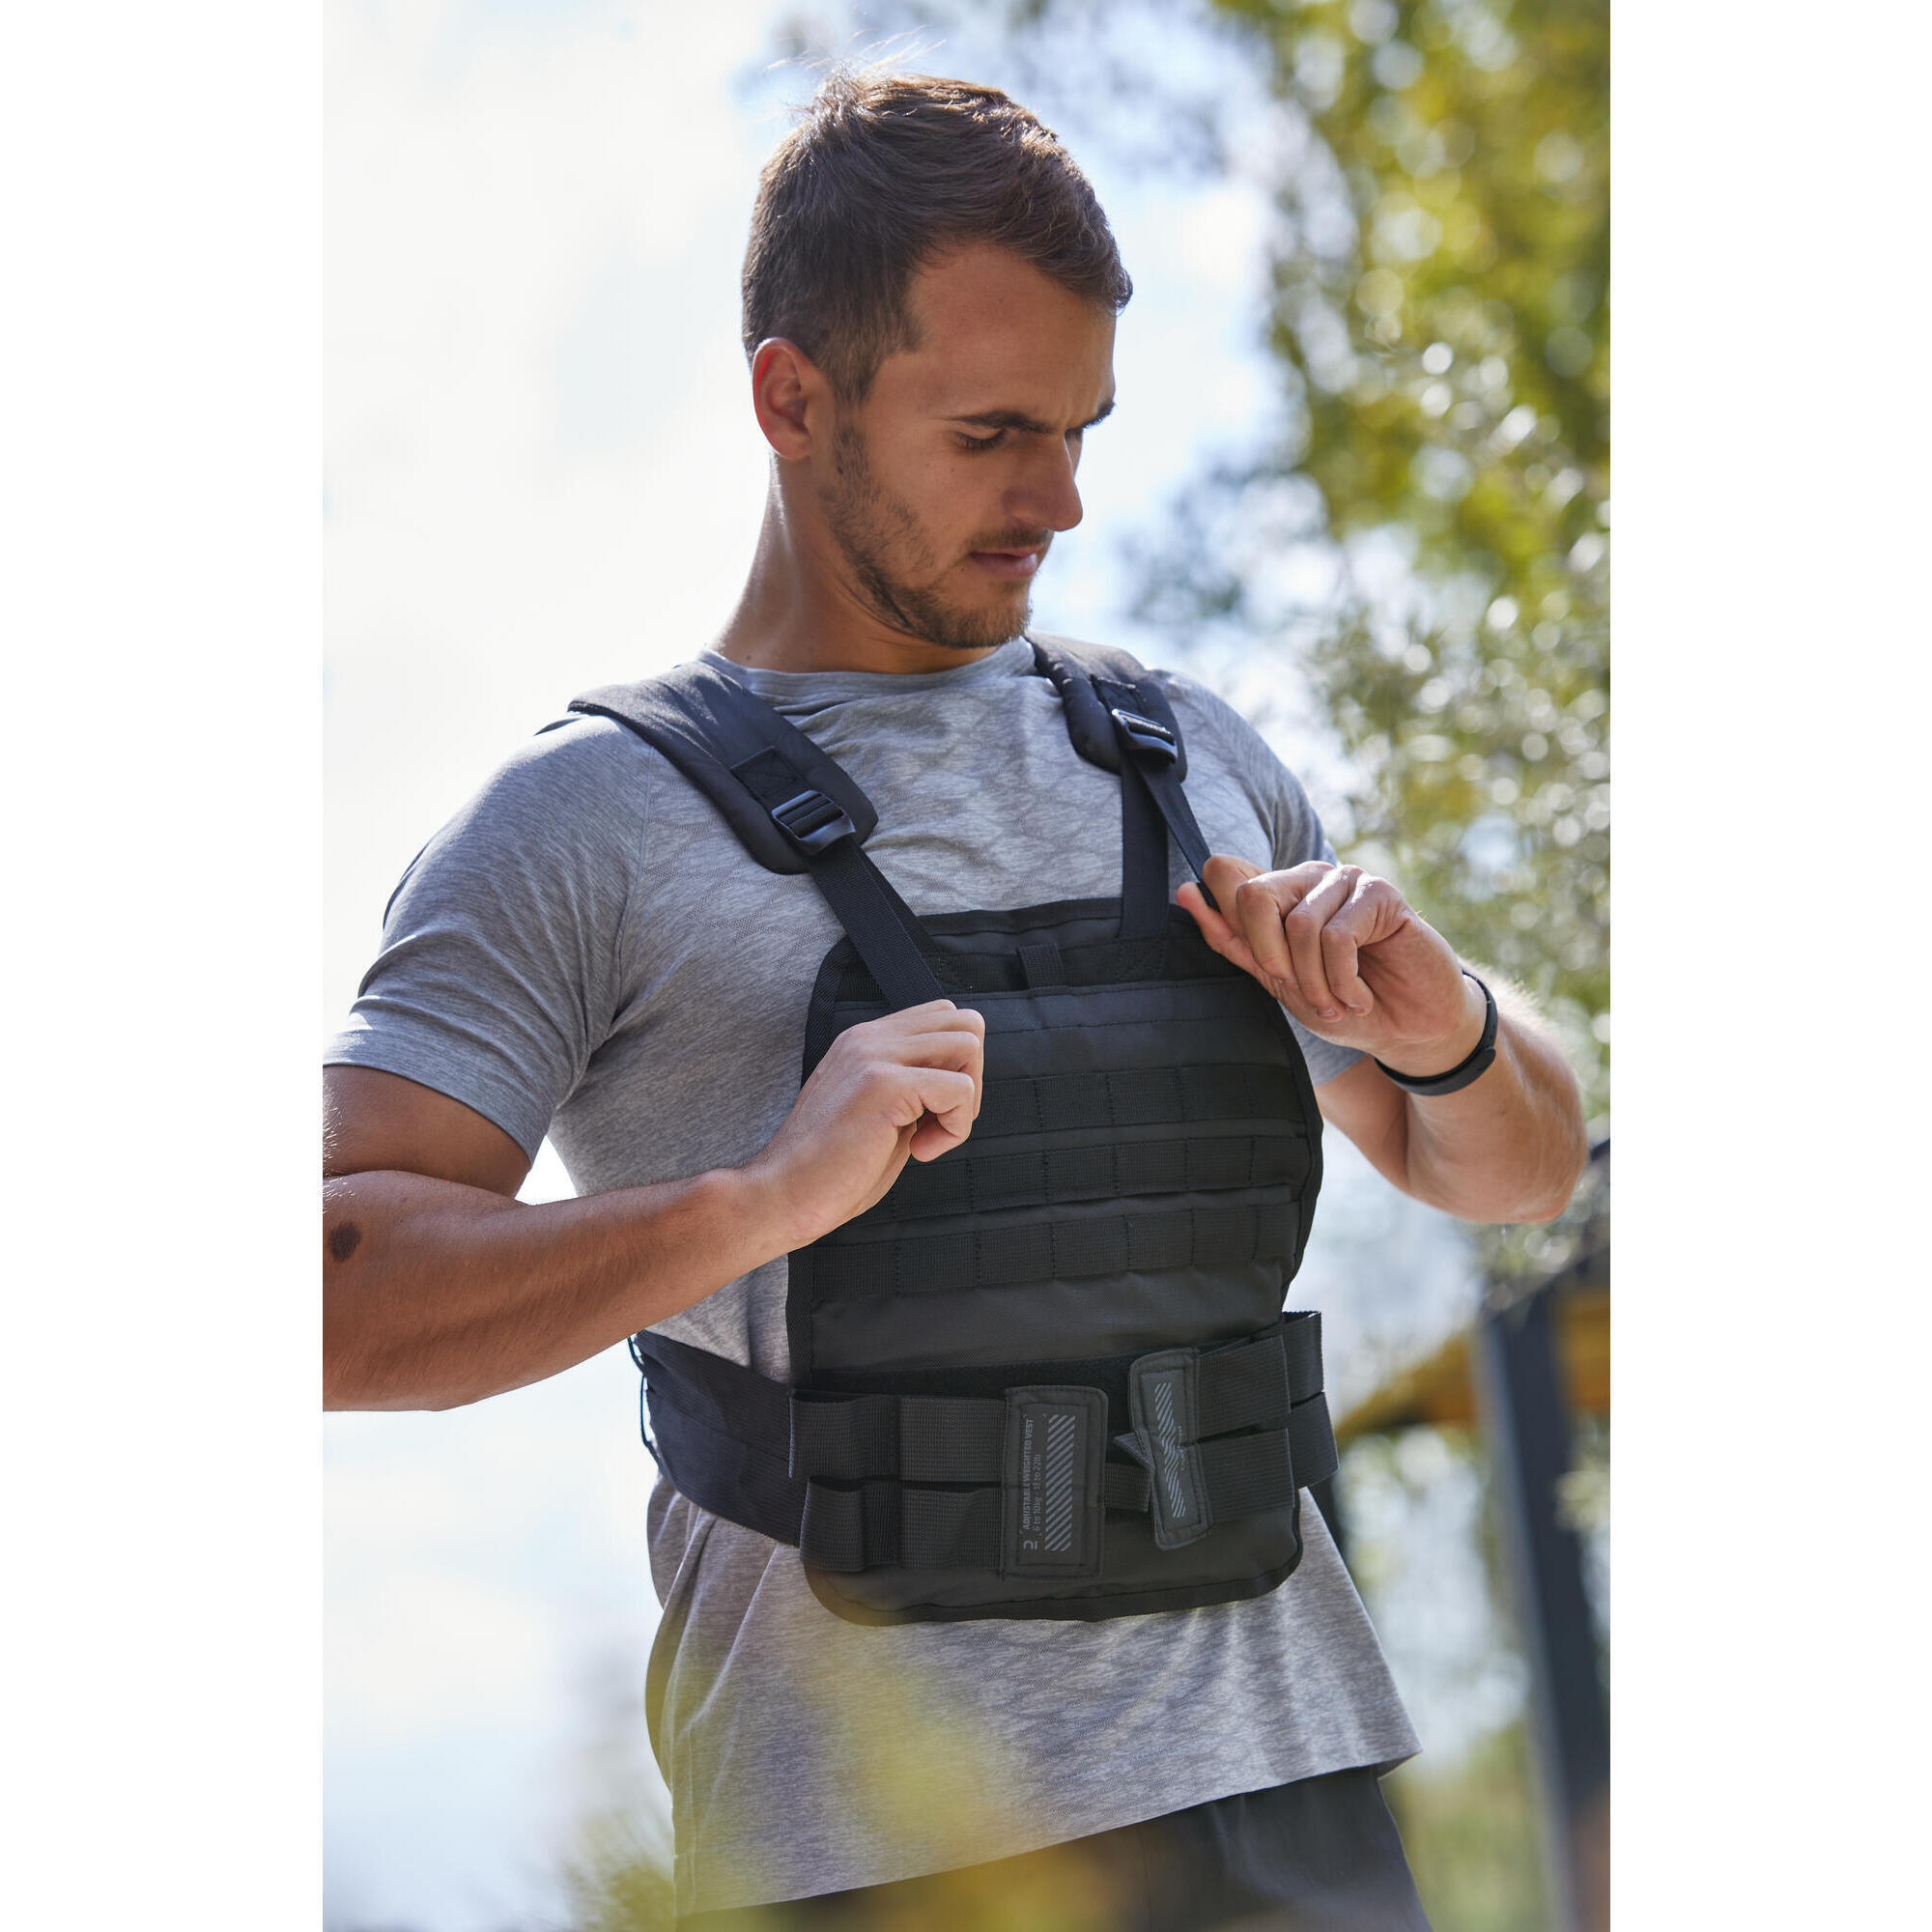 https://contents.mediadecathlon.com/p2313863/k$3fd4f89af99ec53b1bc3e868d97a89d1/adjustable-6-10kg-weighted-training-vest-corength-8734579.jpg